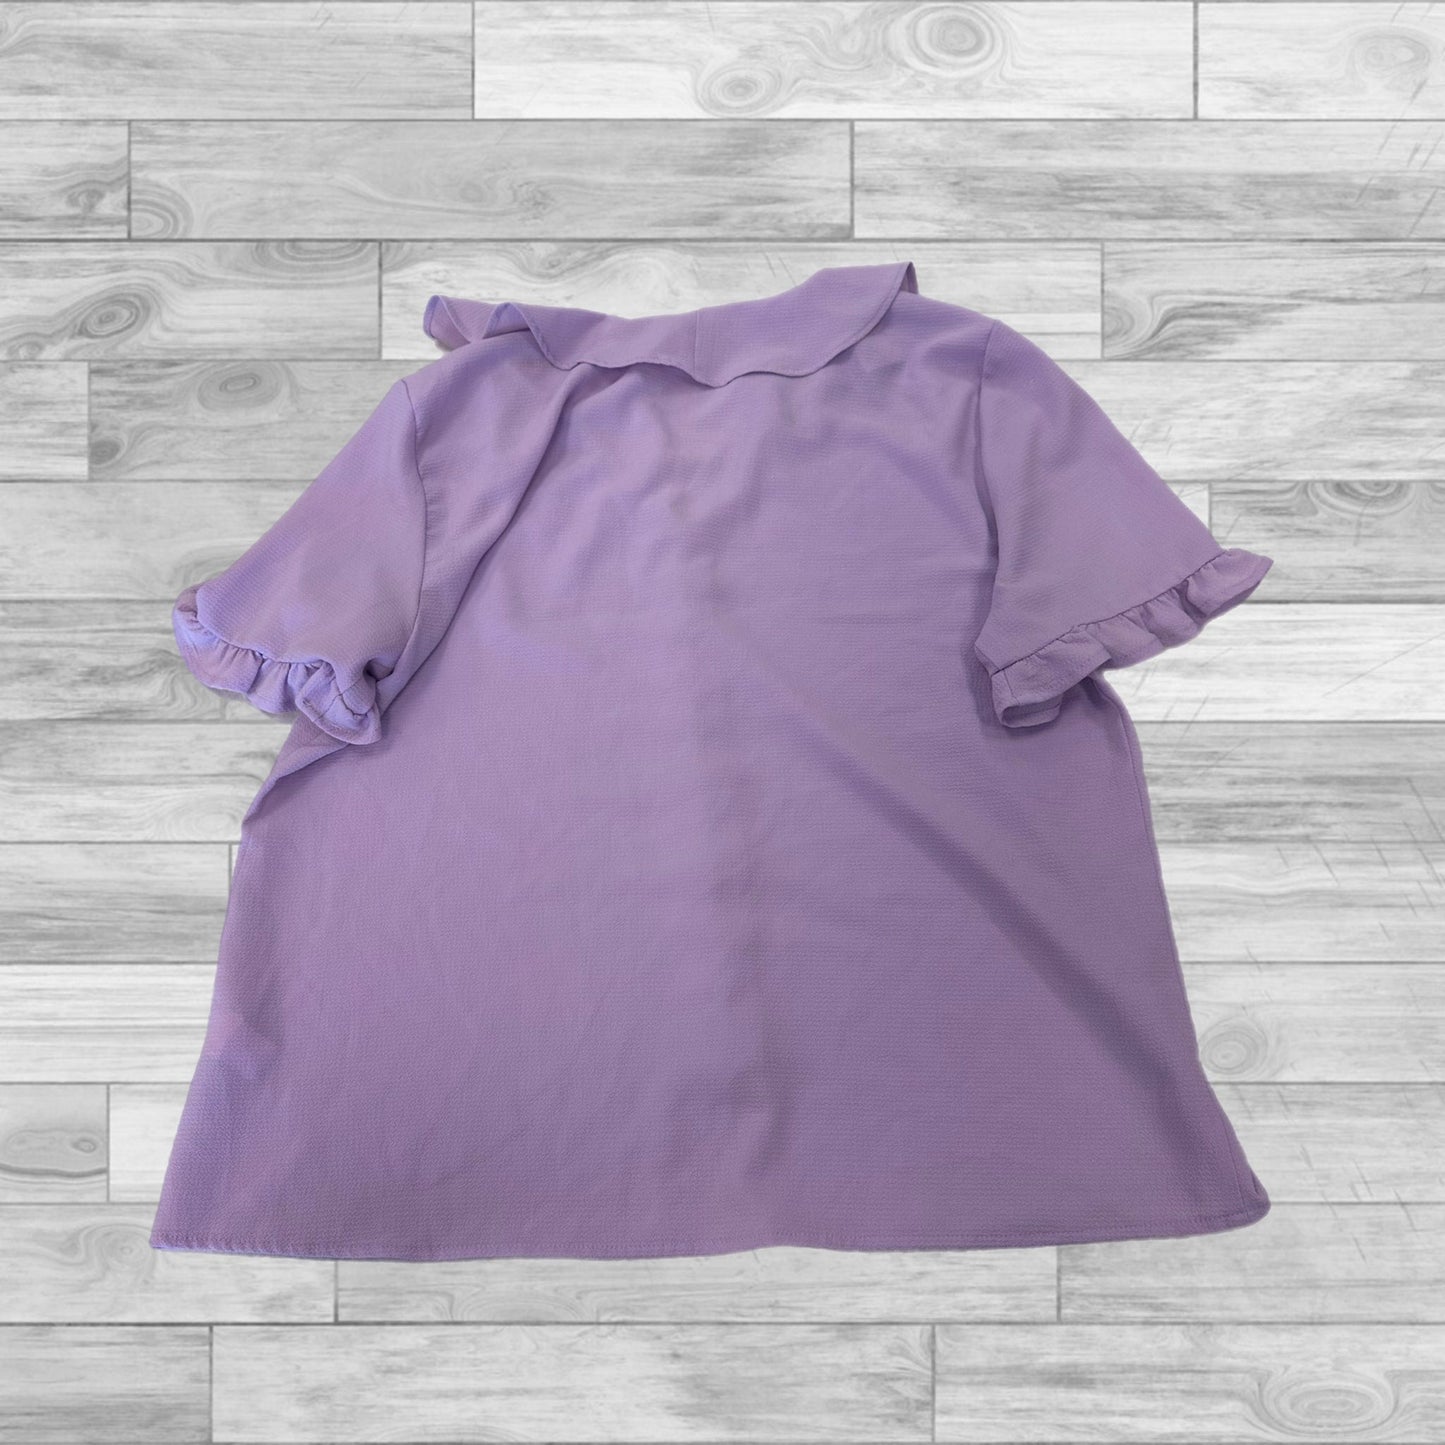 Purple Top Short Sleeve Cece, Size L